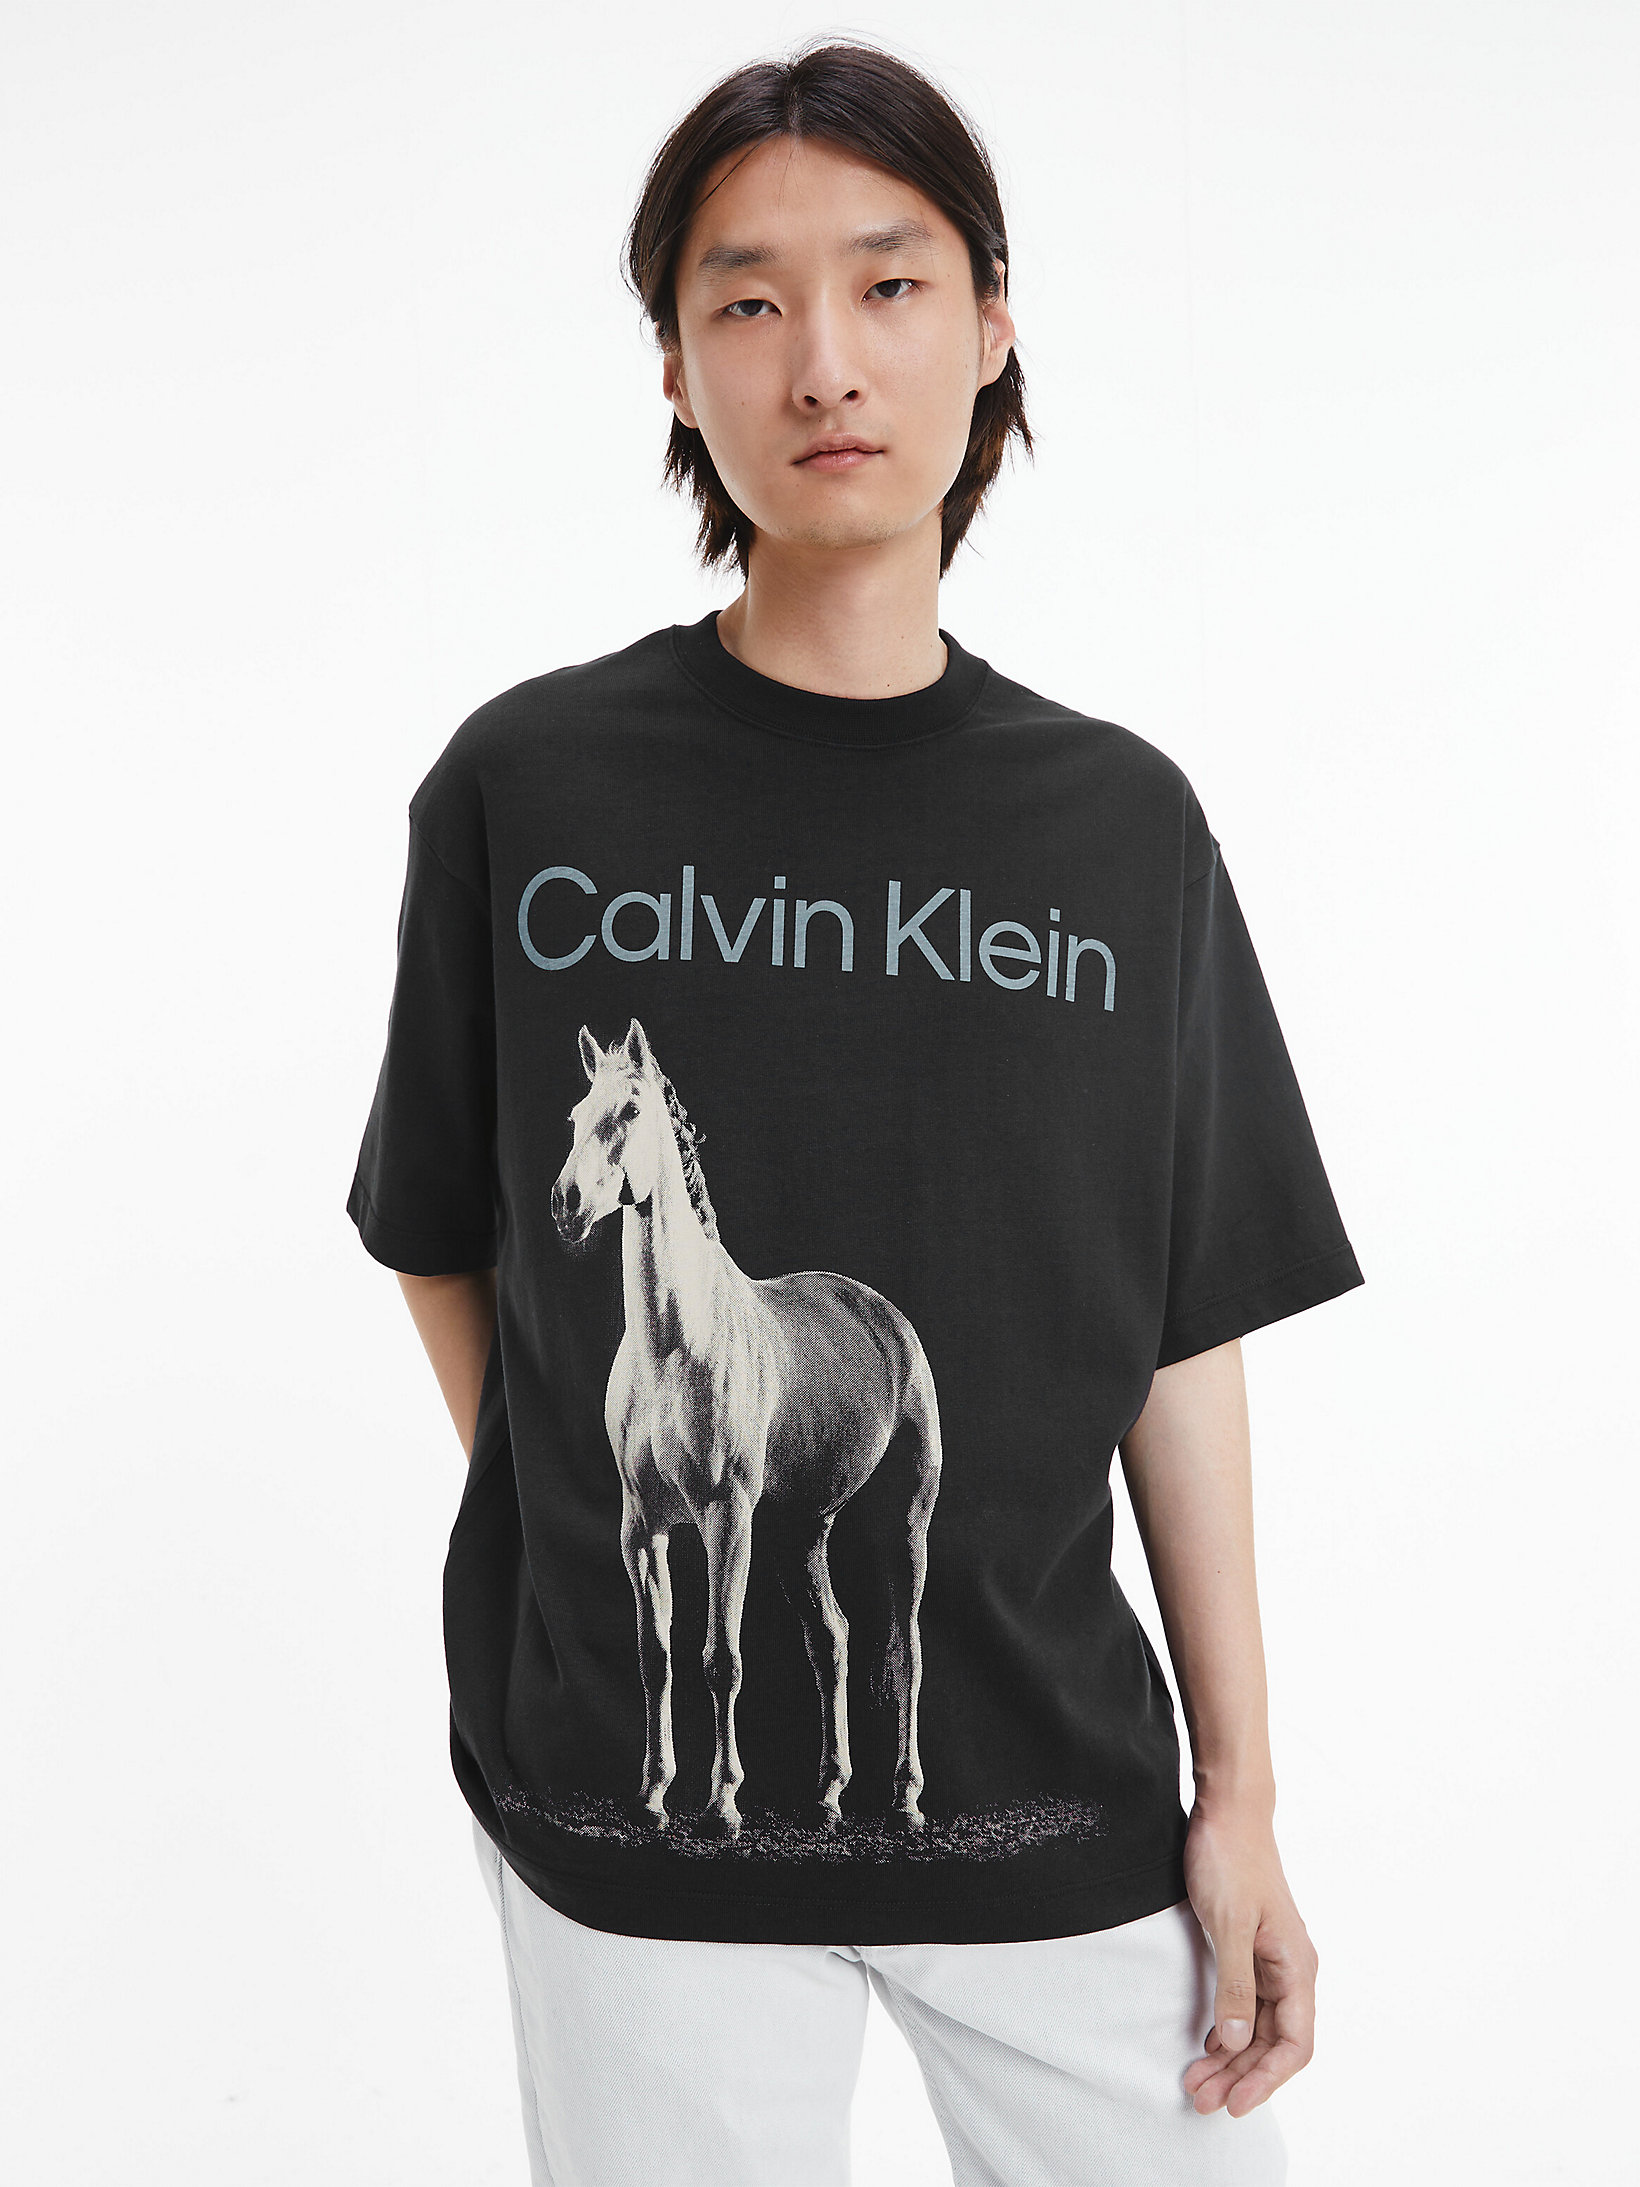 Black Beauty Unisex Printed T-Shirt - CK Standards undefined men Calvin Klein